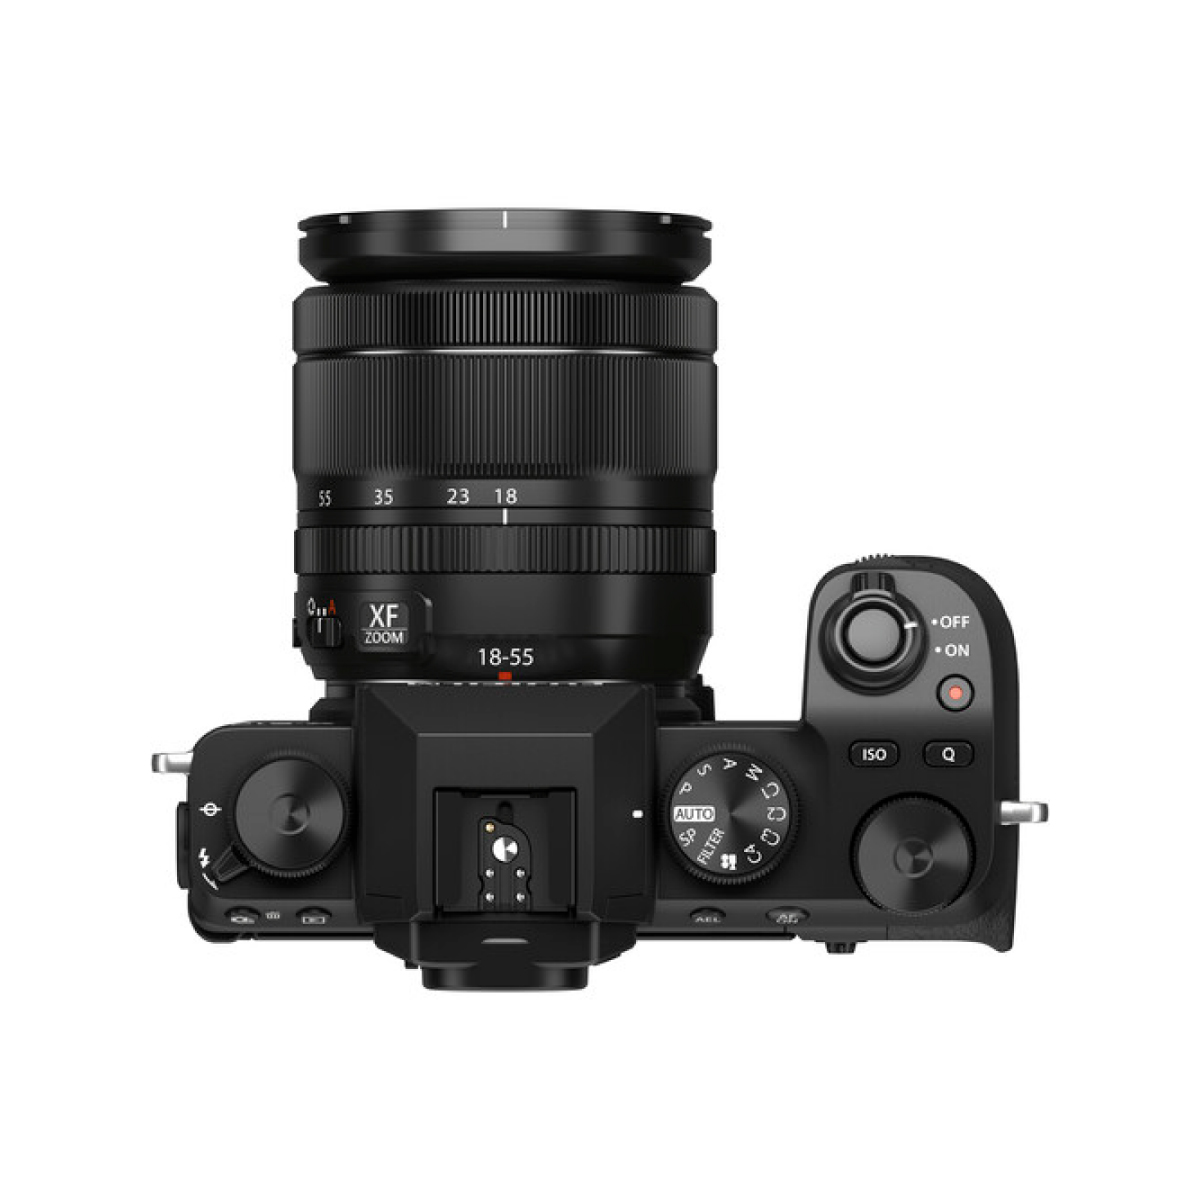 Fujifilm X-S10 Mirrorless Camera Body with XF18-55mm Lens – Black (6)